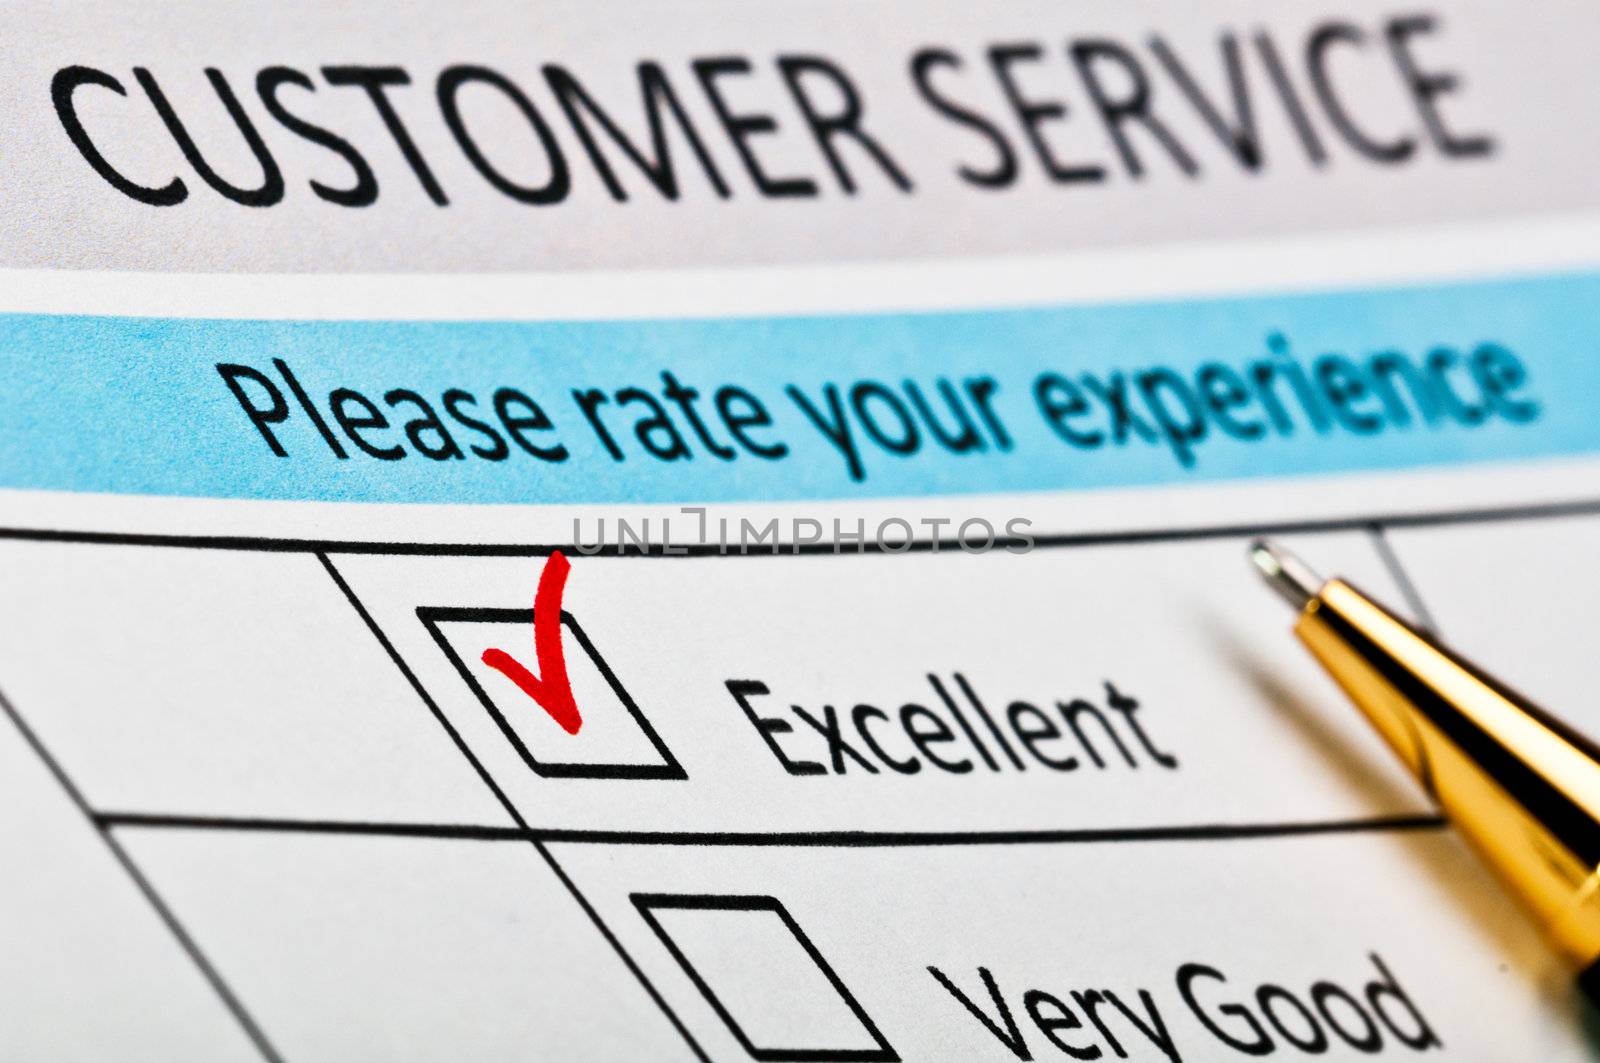 Customer service satisfaction survey form. by lobzik